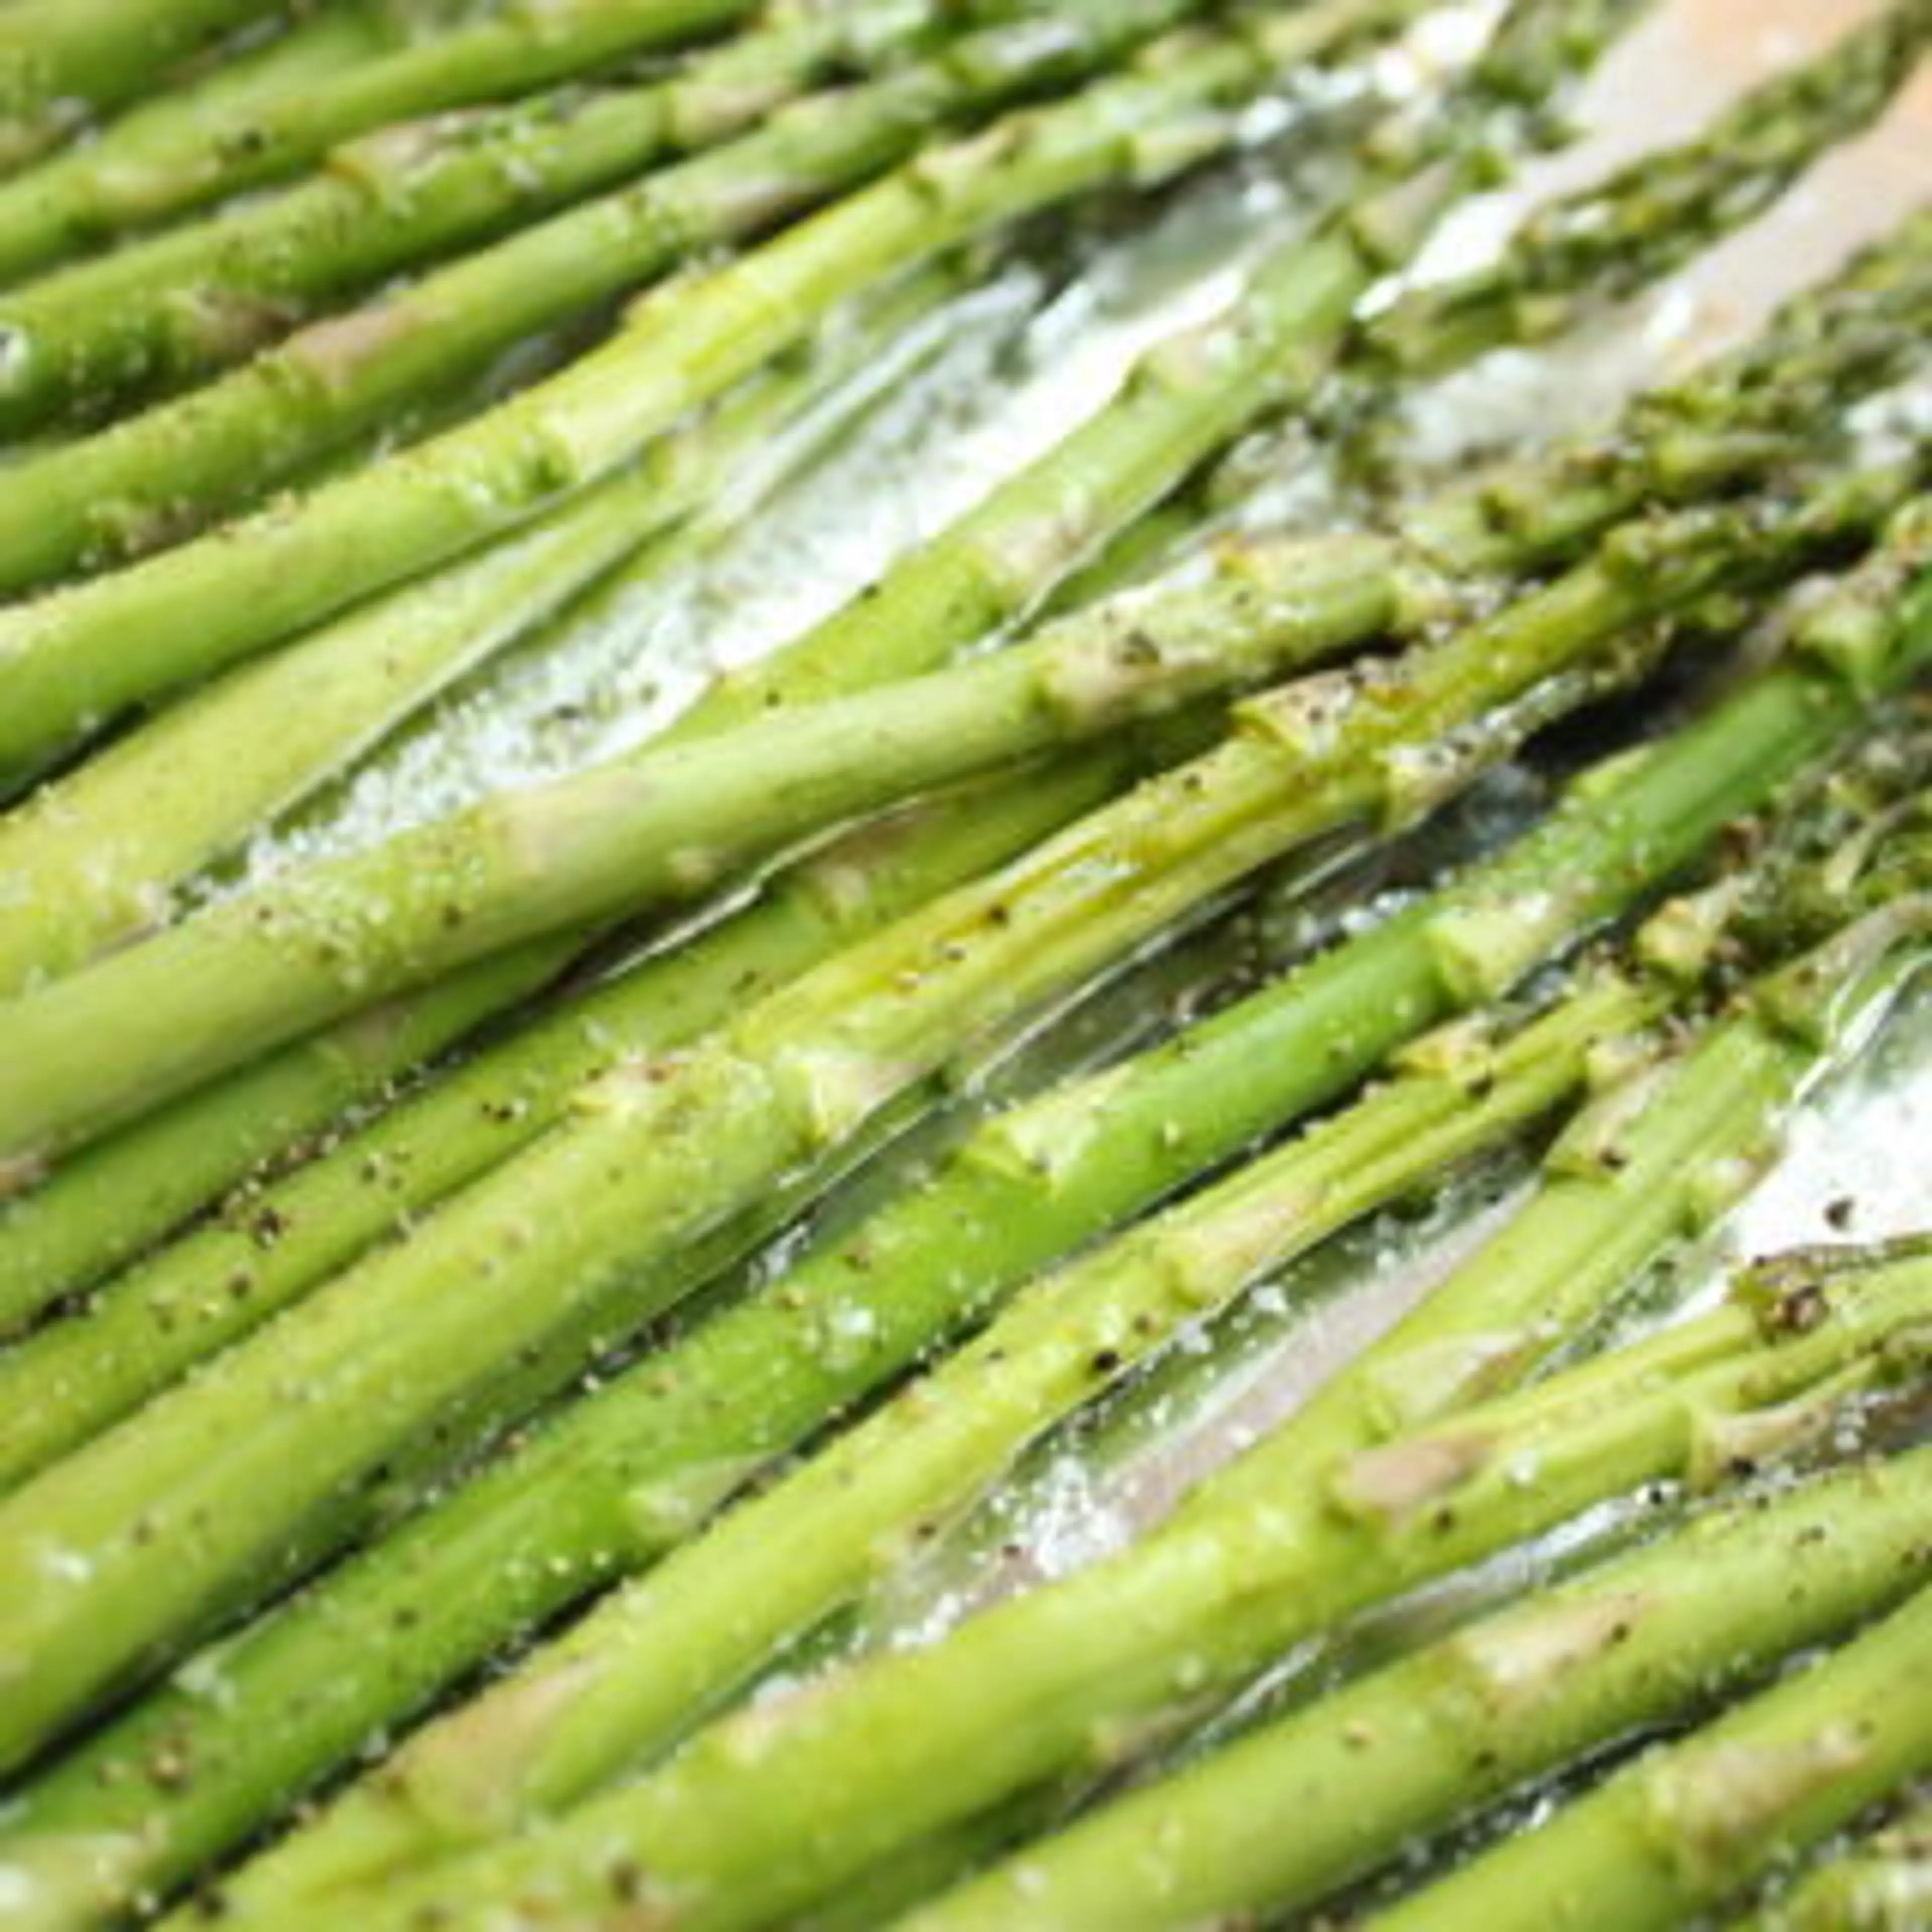 10 Minute Roasted Asparagus